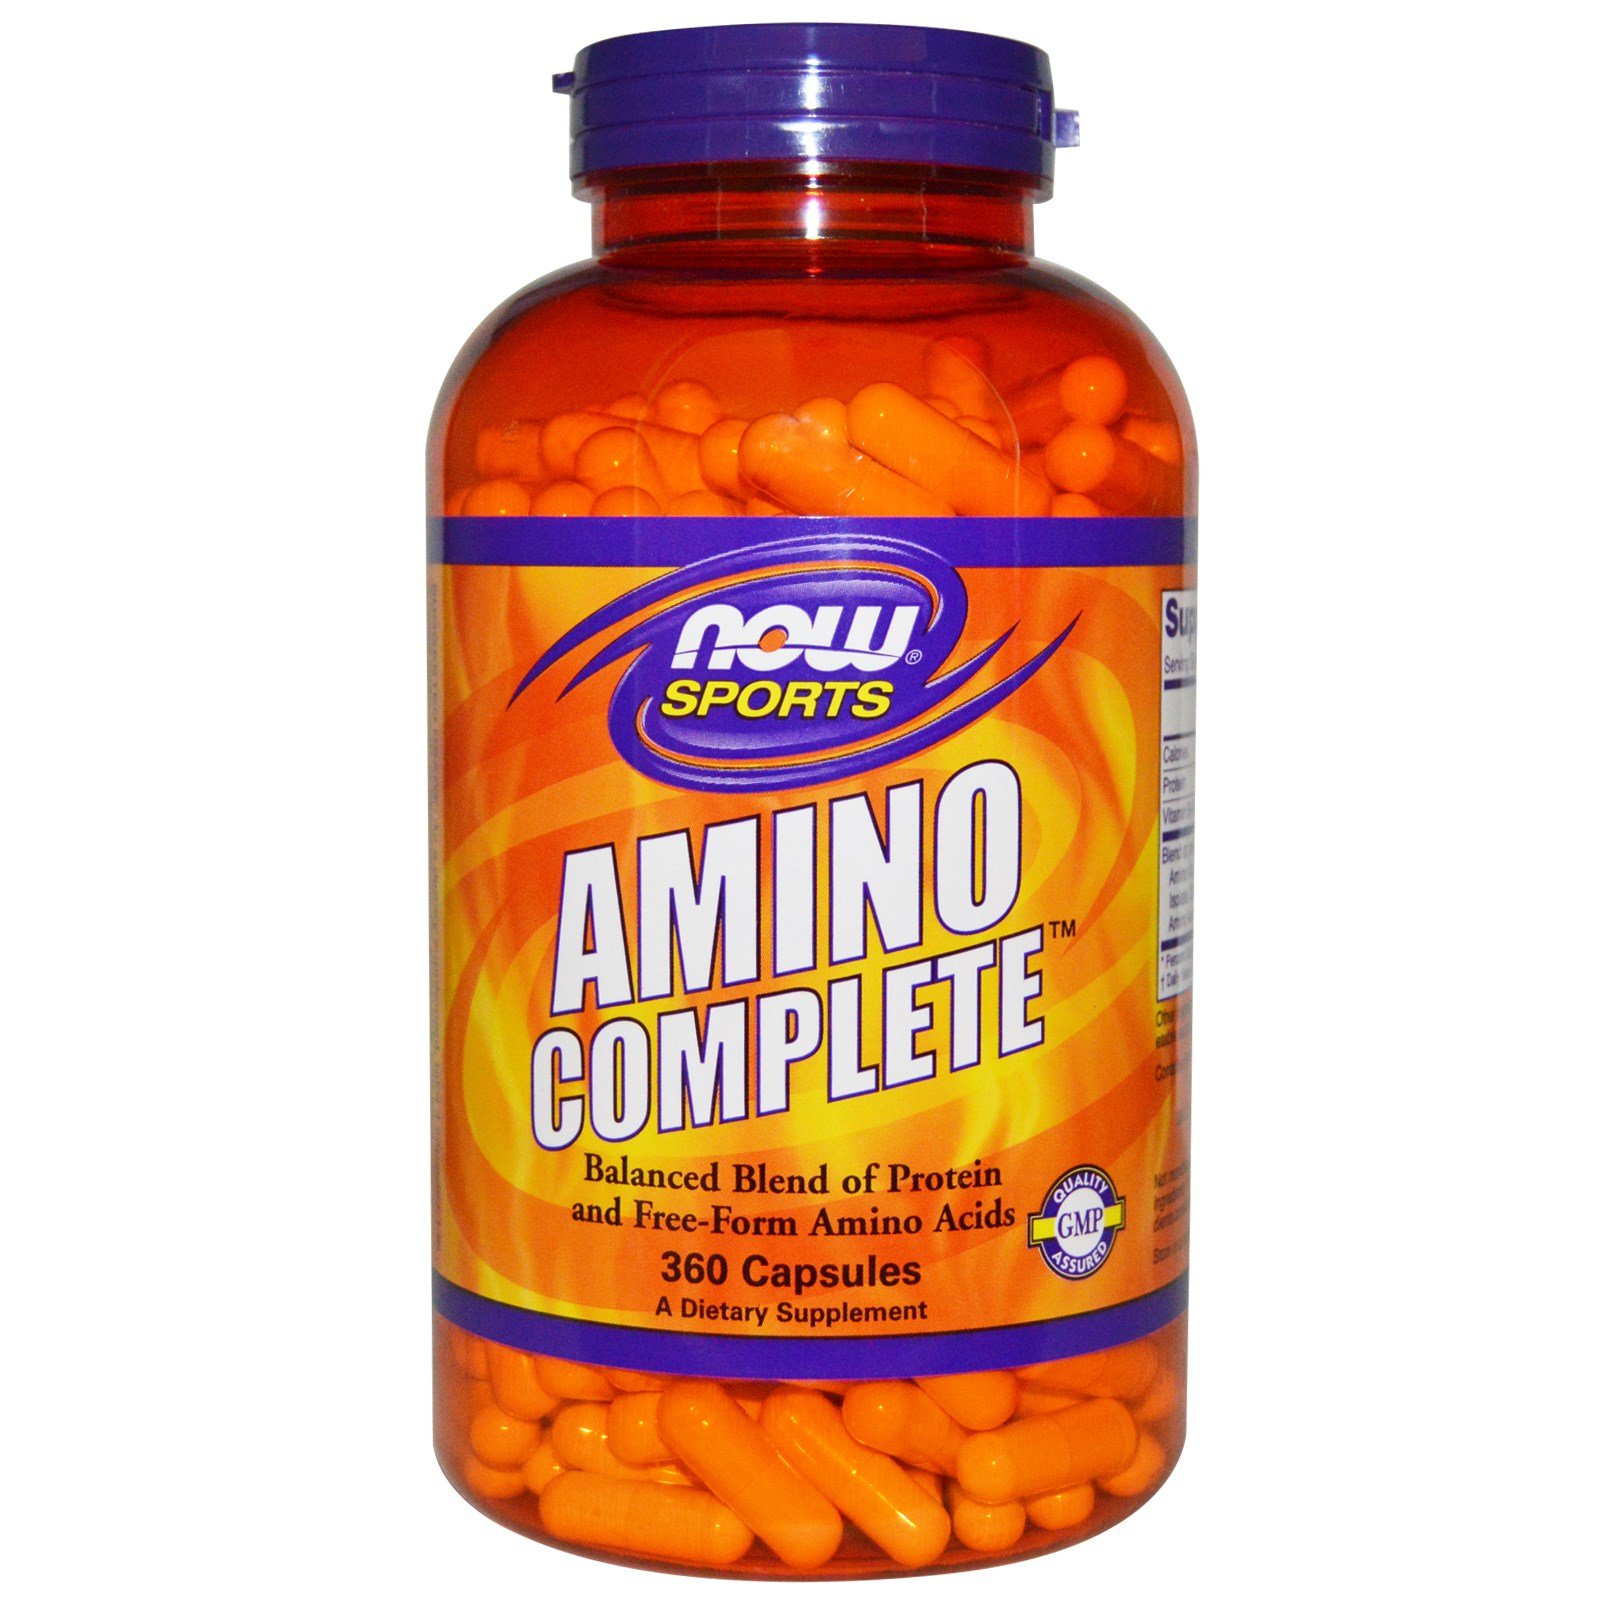 Amino Complete, 360 pcs, Now. Amino acid complex. 